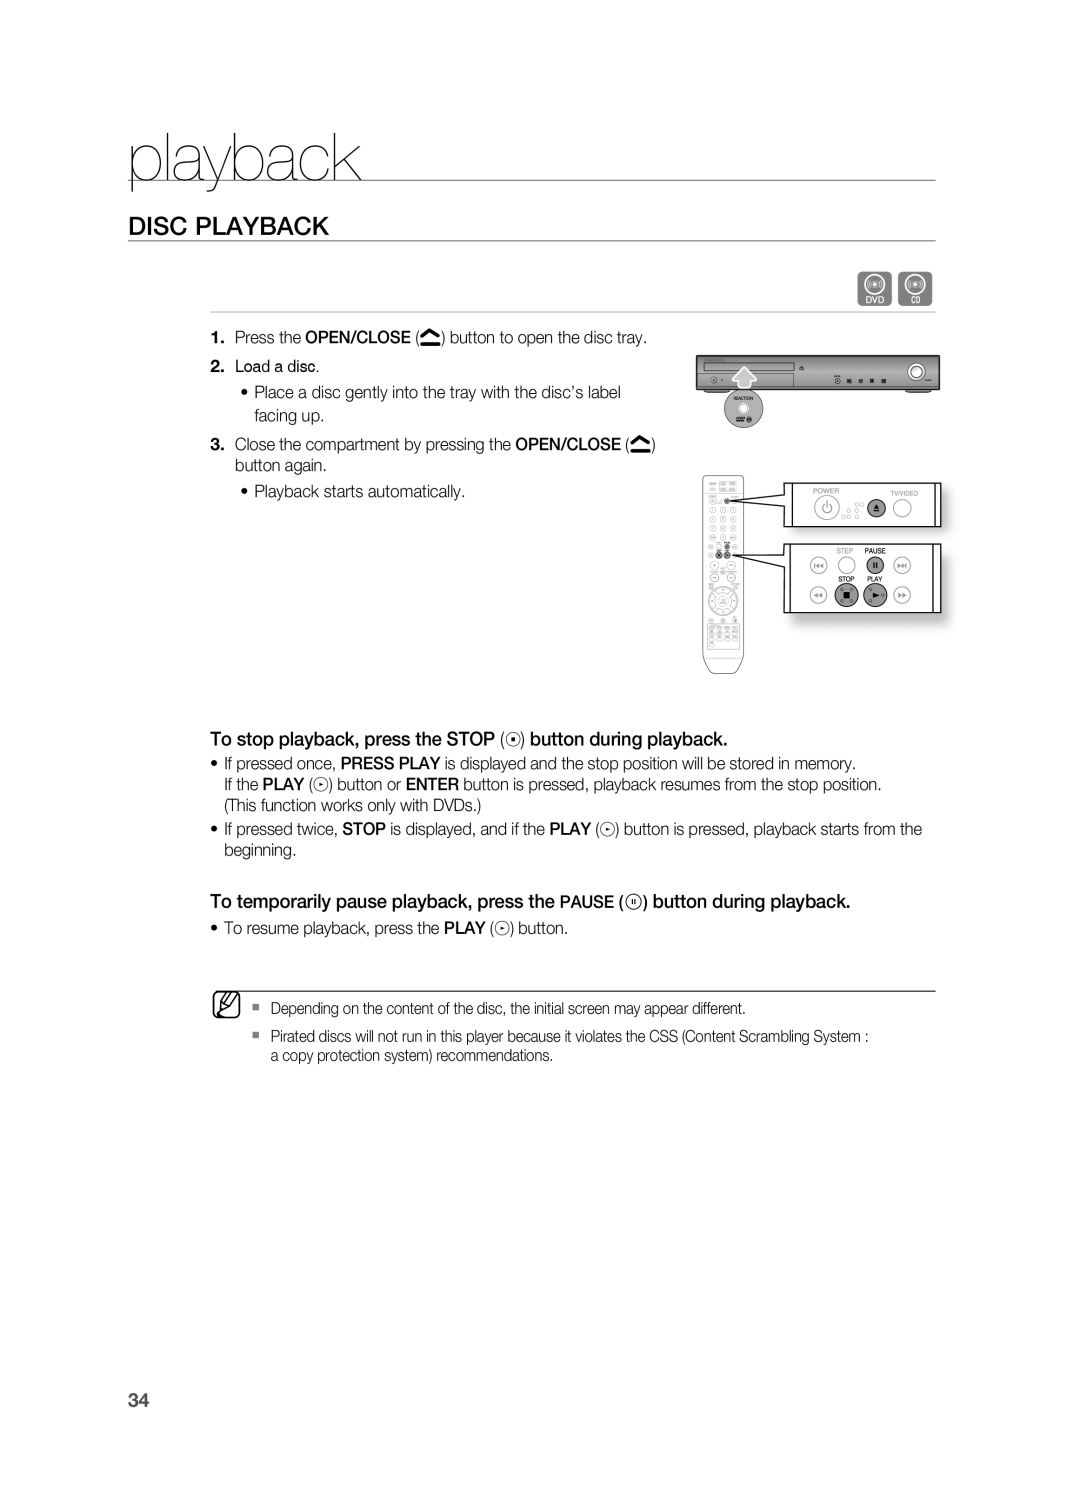 Samsung HT-TZ312 manual playback, DiSC PLayBaCK 